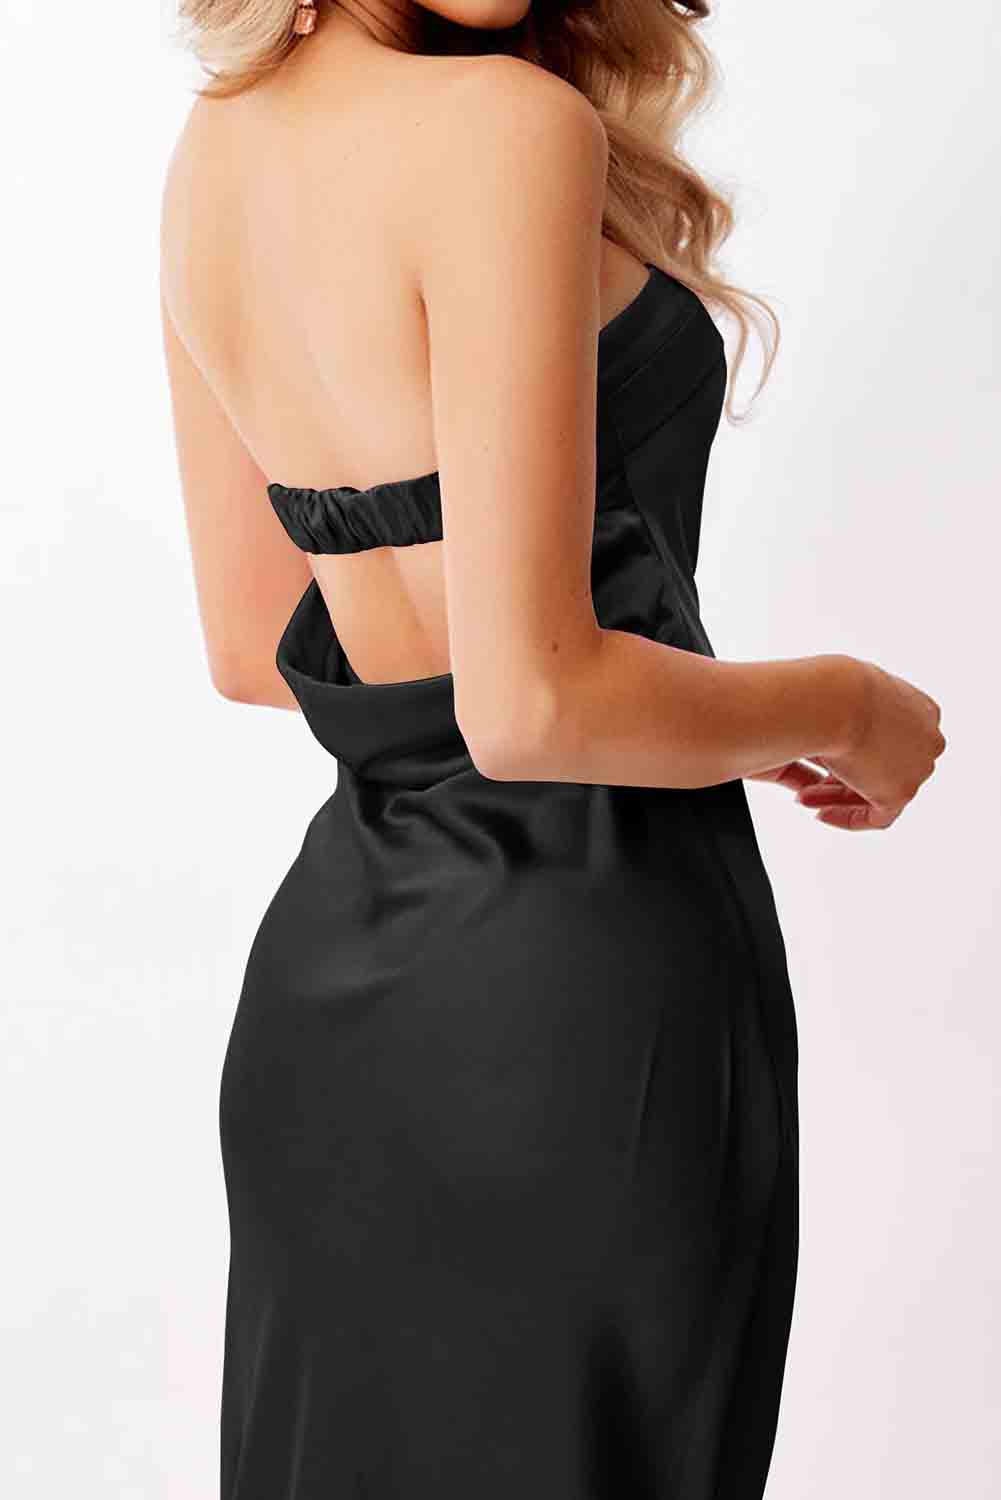 Black Satin Backless Tube Top Maxi Dress